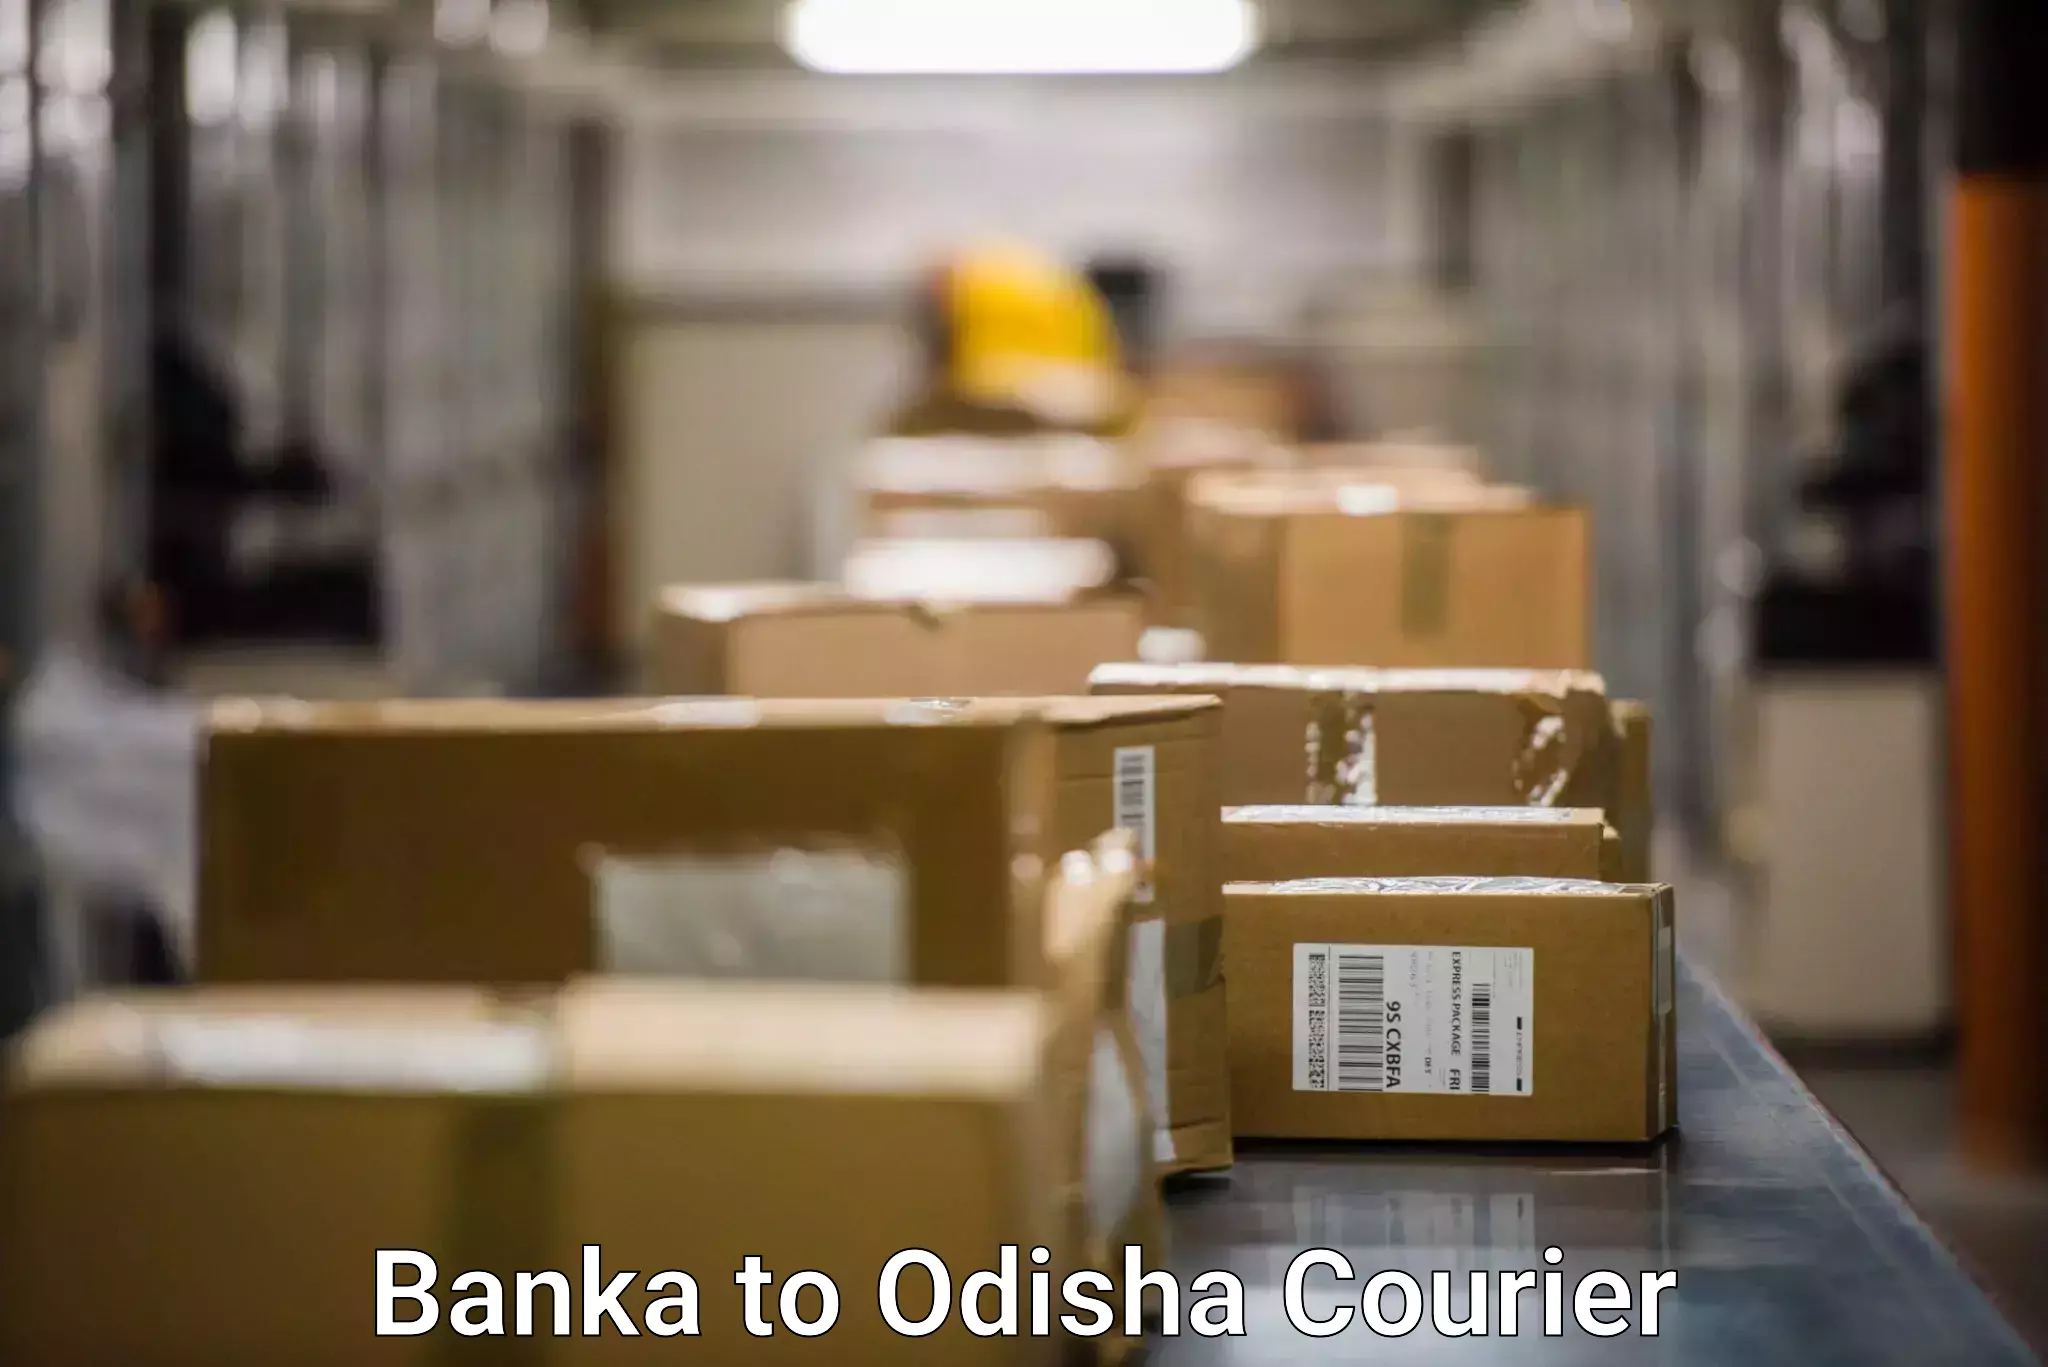 Reliable package handling in Banka to Baleswar